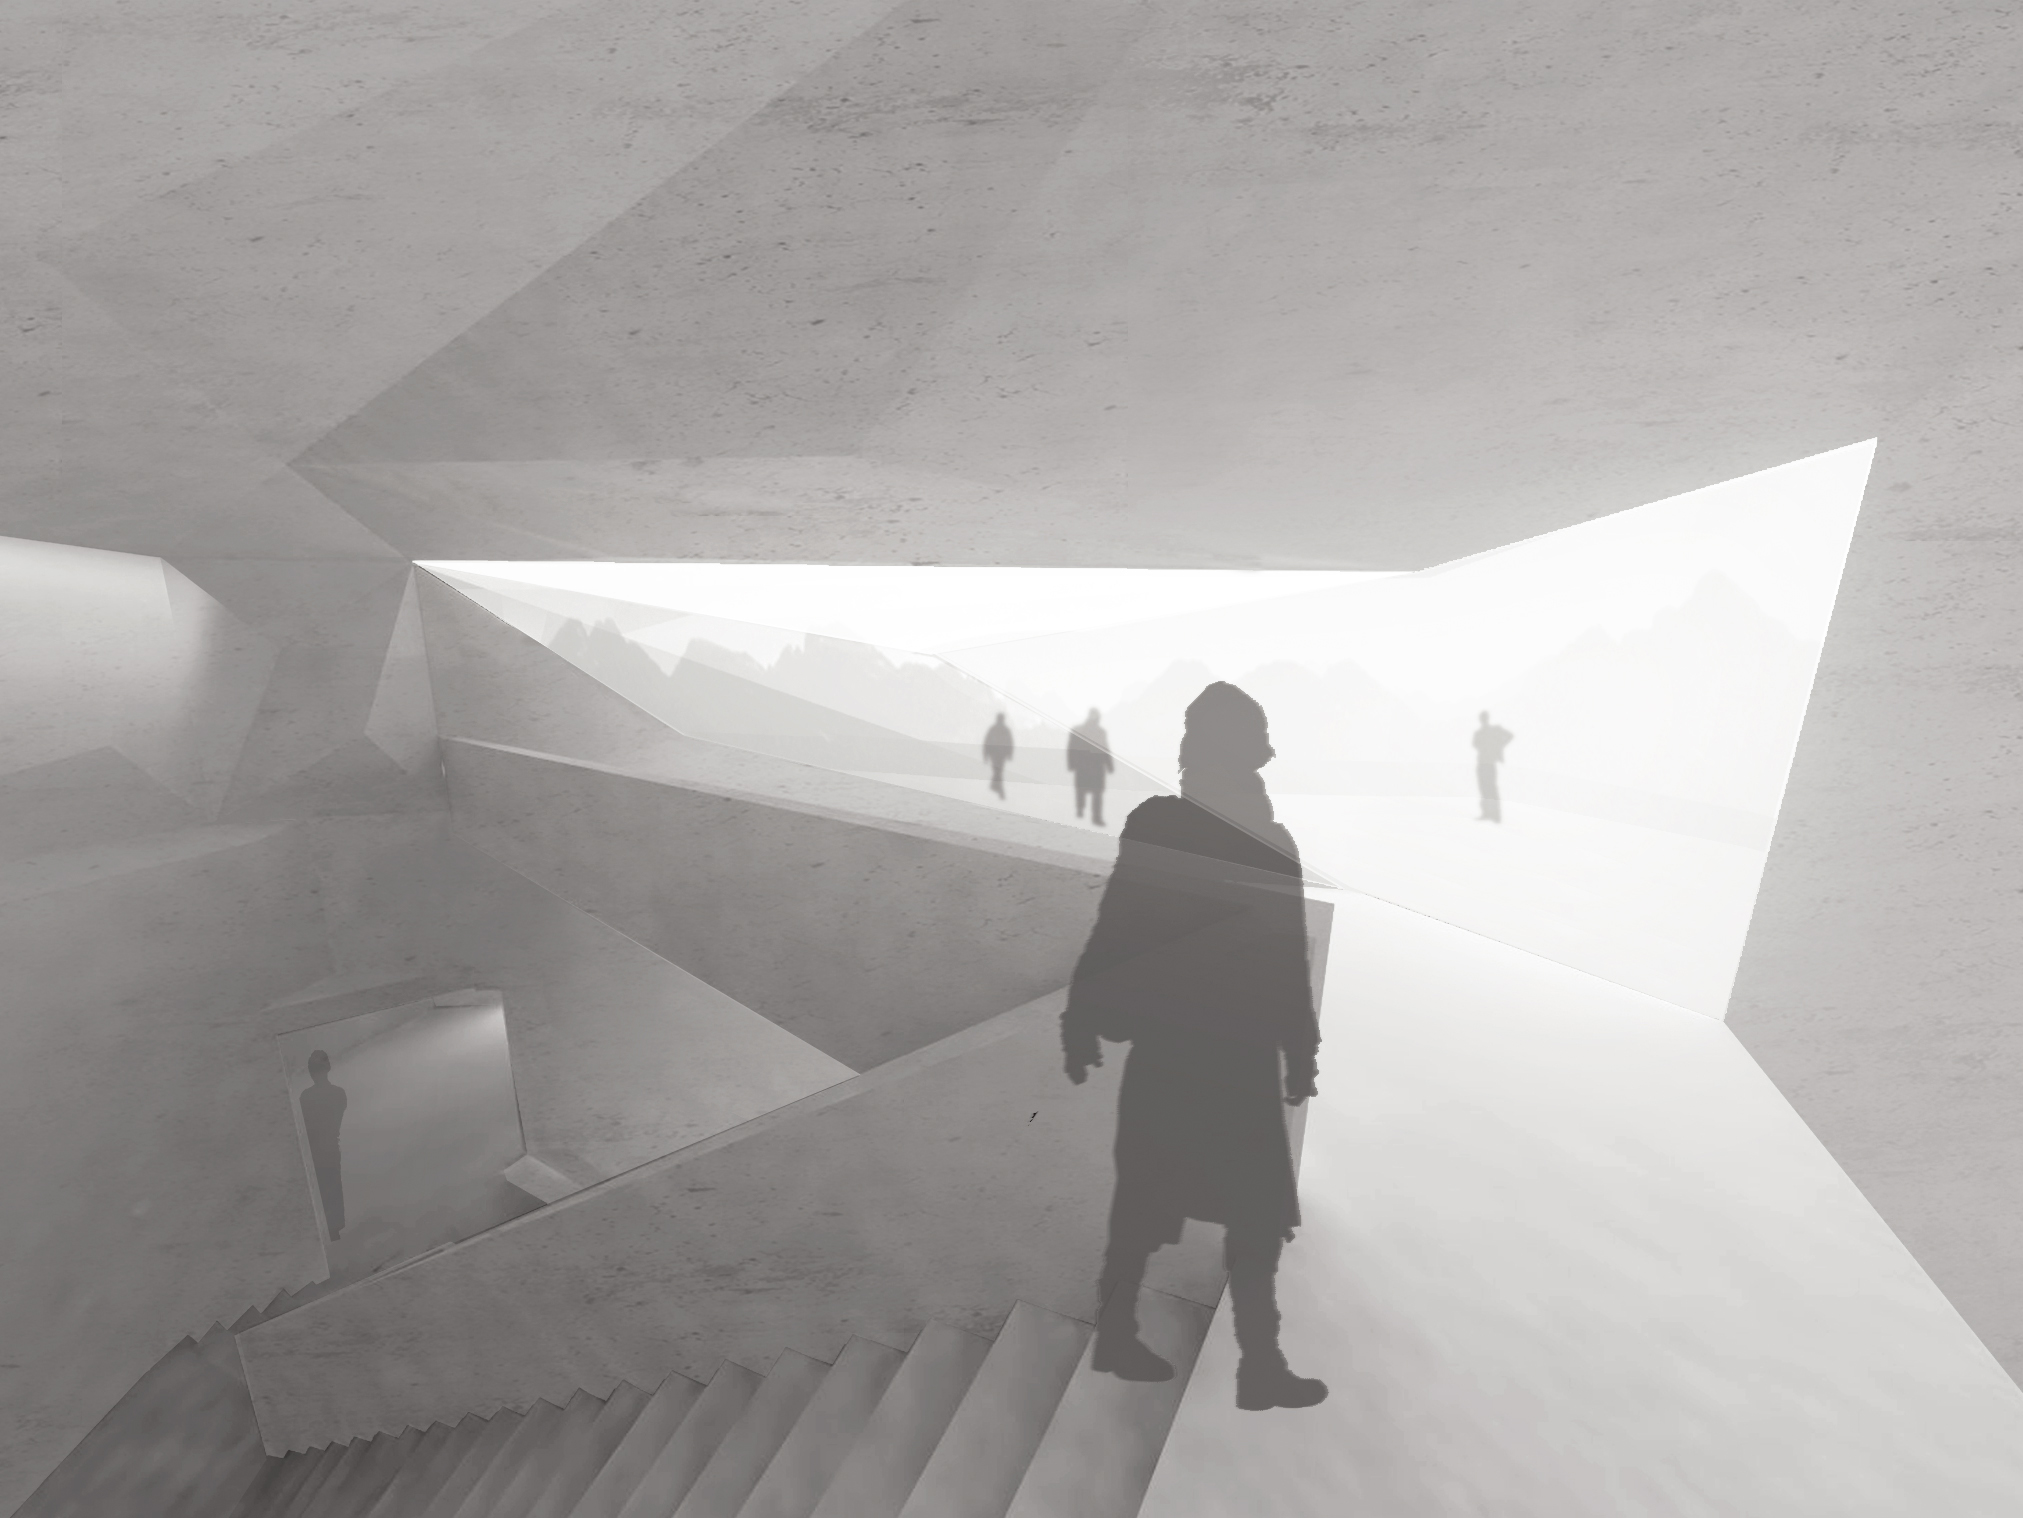 Michael-Becker-Architects-Architekten-Gipfelstation-Nebelhorn-Perspektive-K01